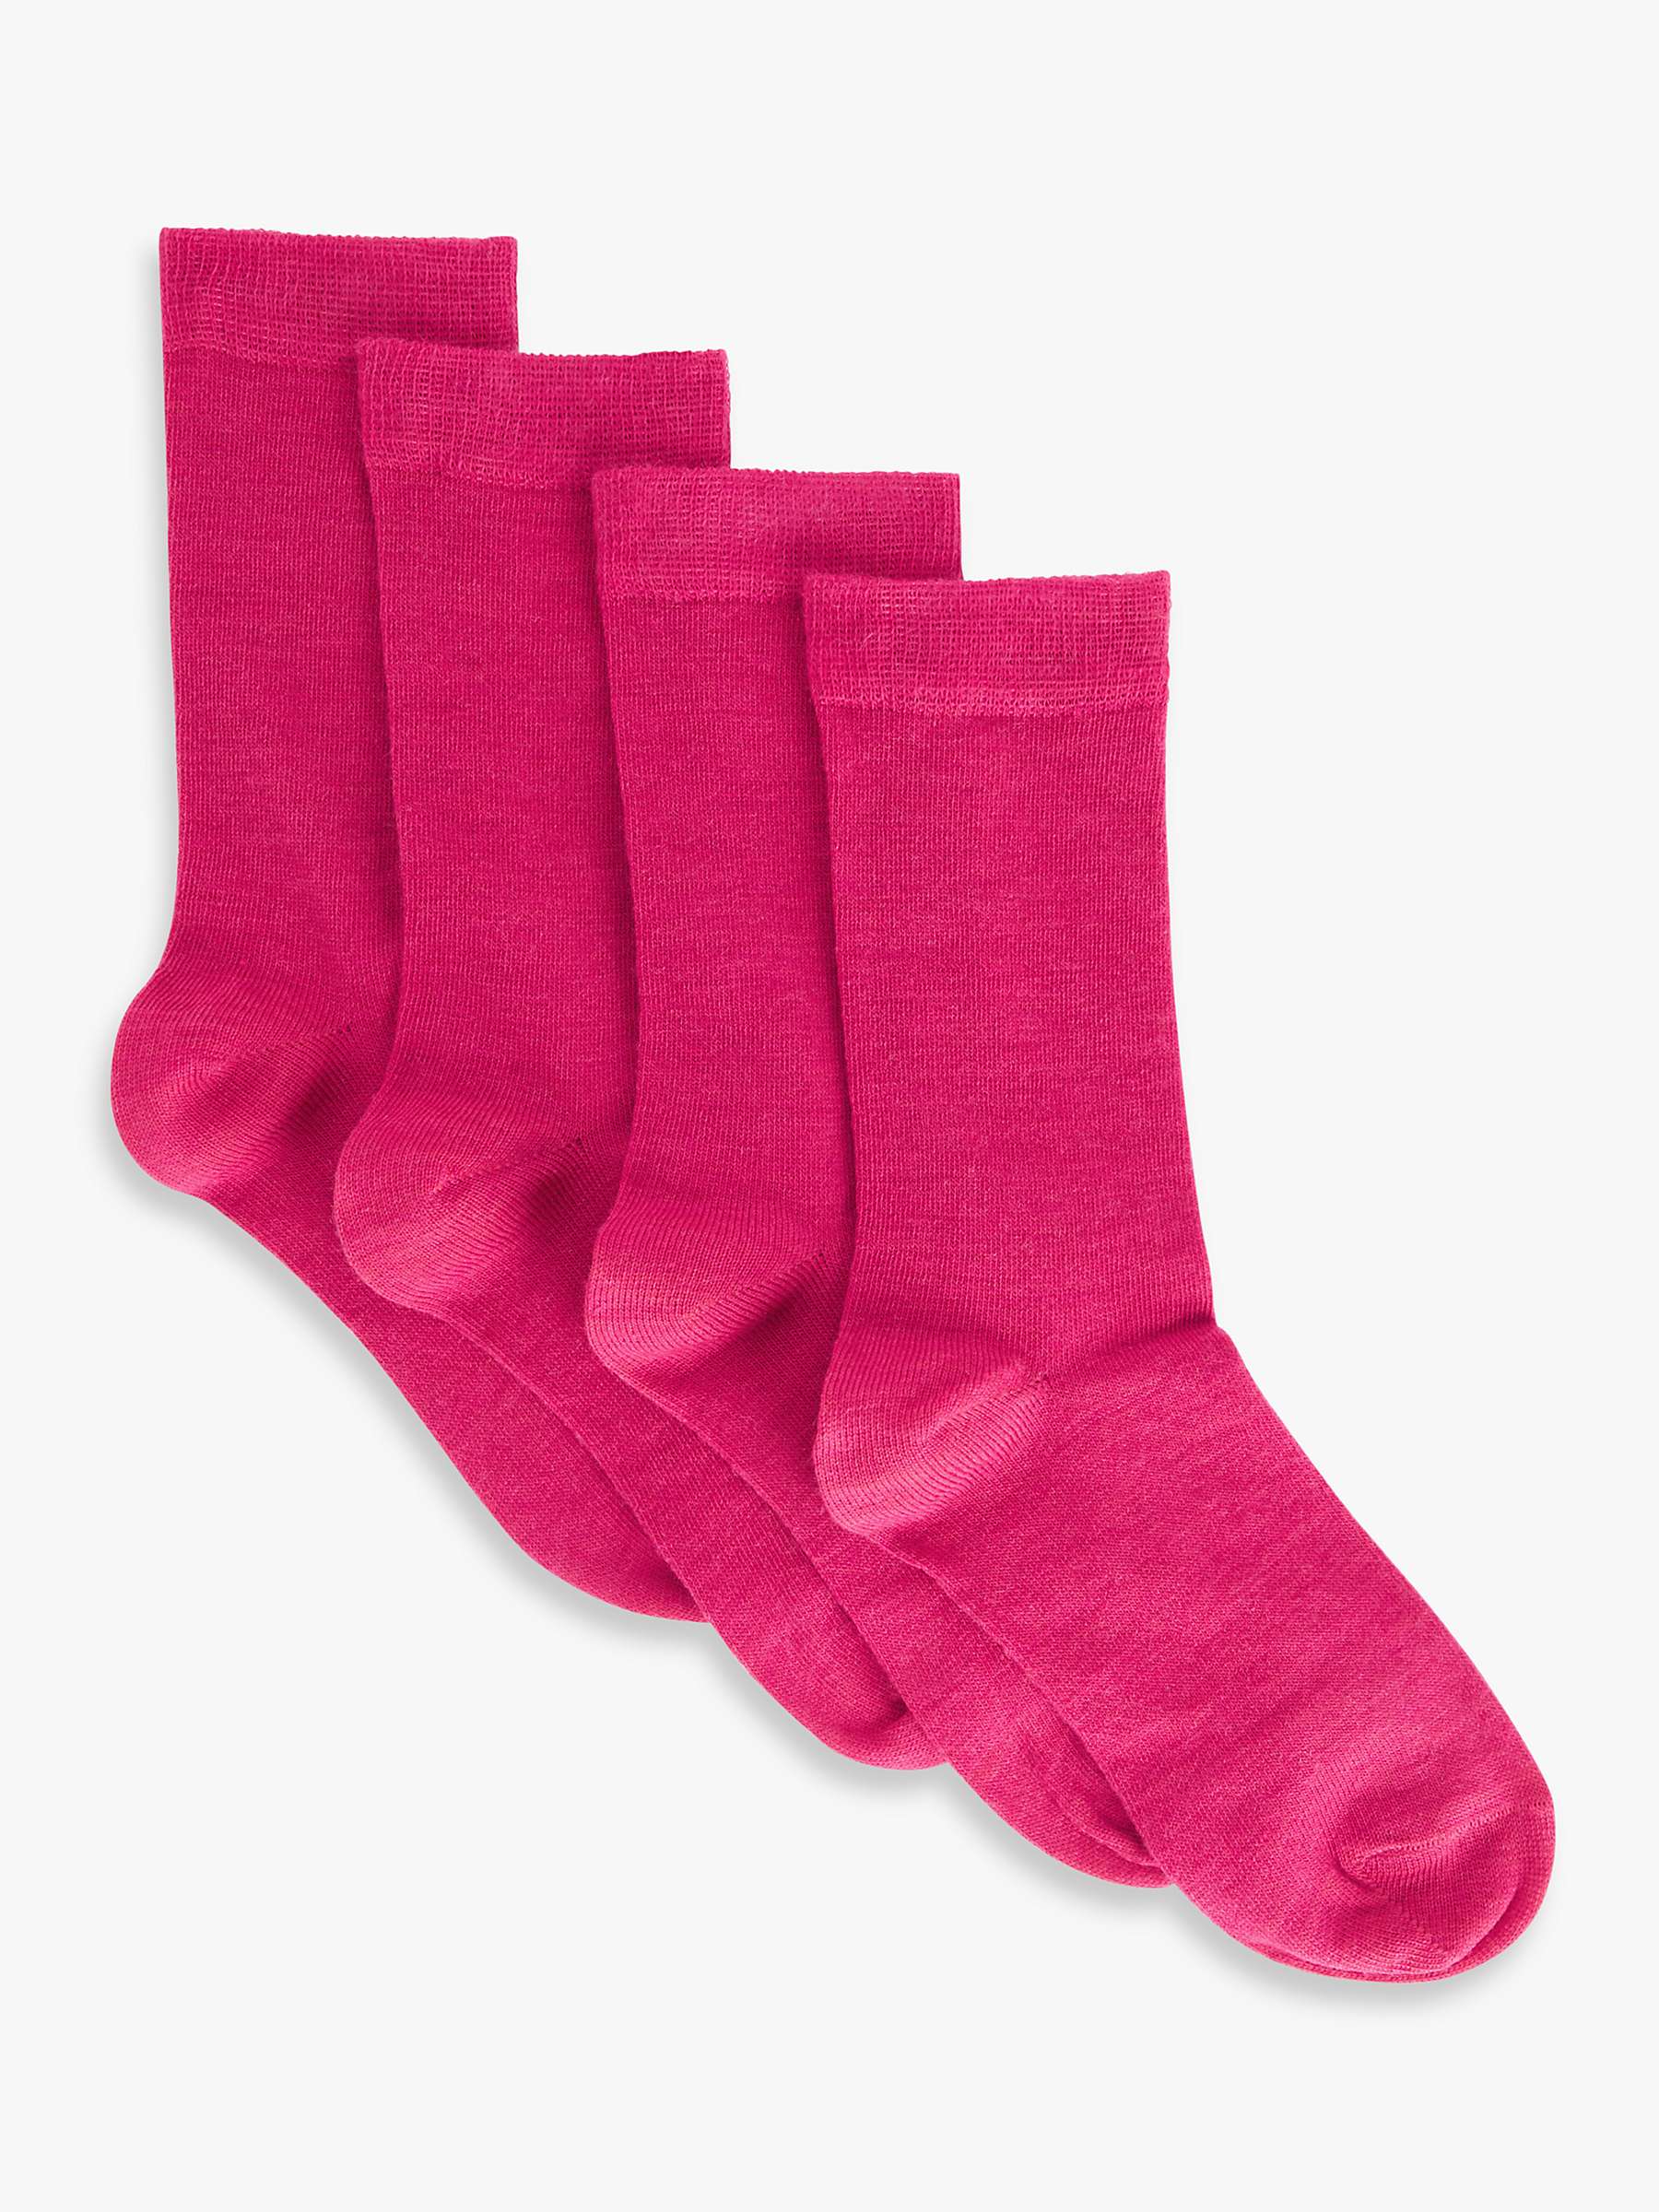 Buy John Lewis Merino Wool Mix Ankle Socks, Pack of 2 Online at johnlewis.com